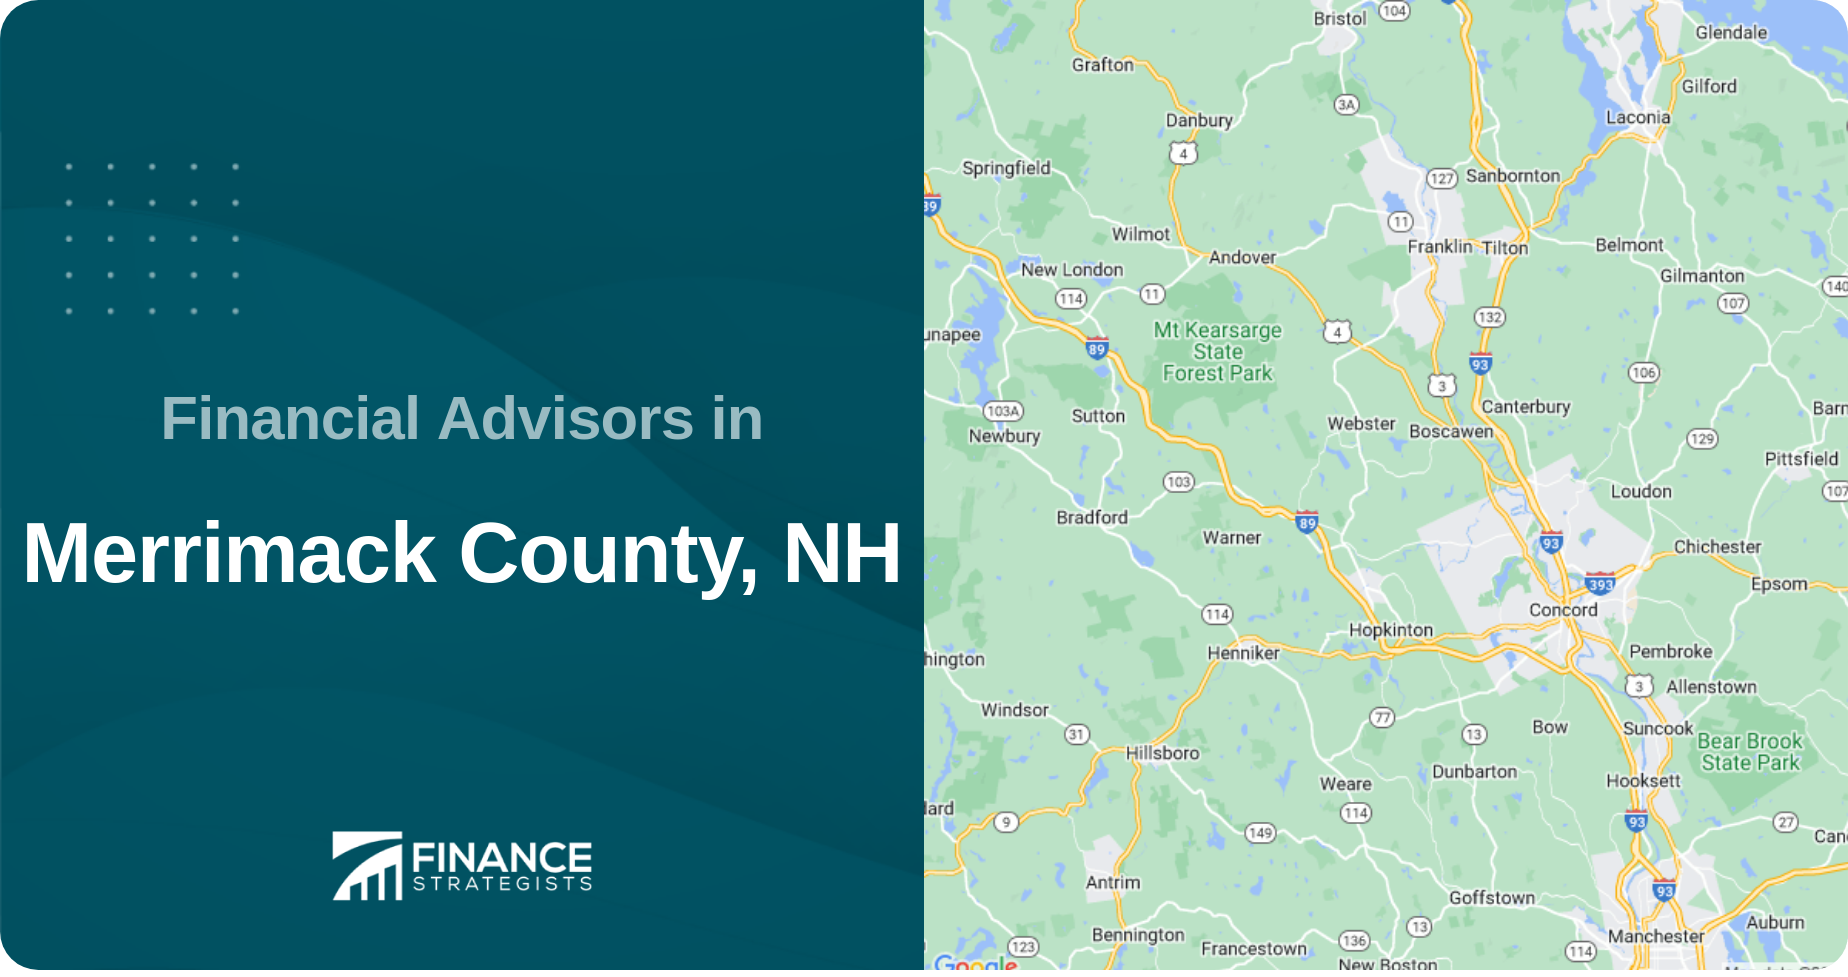 Financial Advisors in Merrimack County, NH